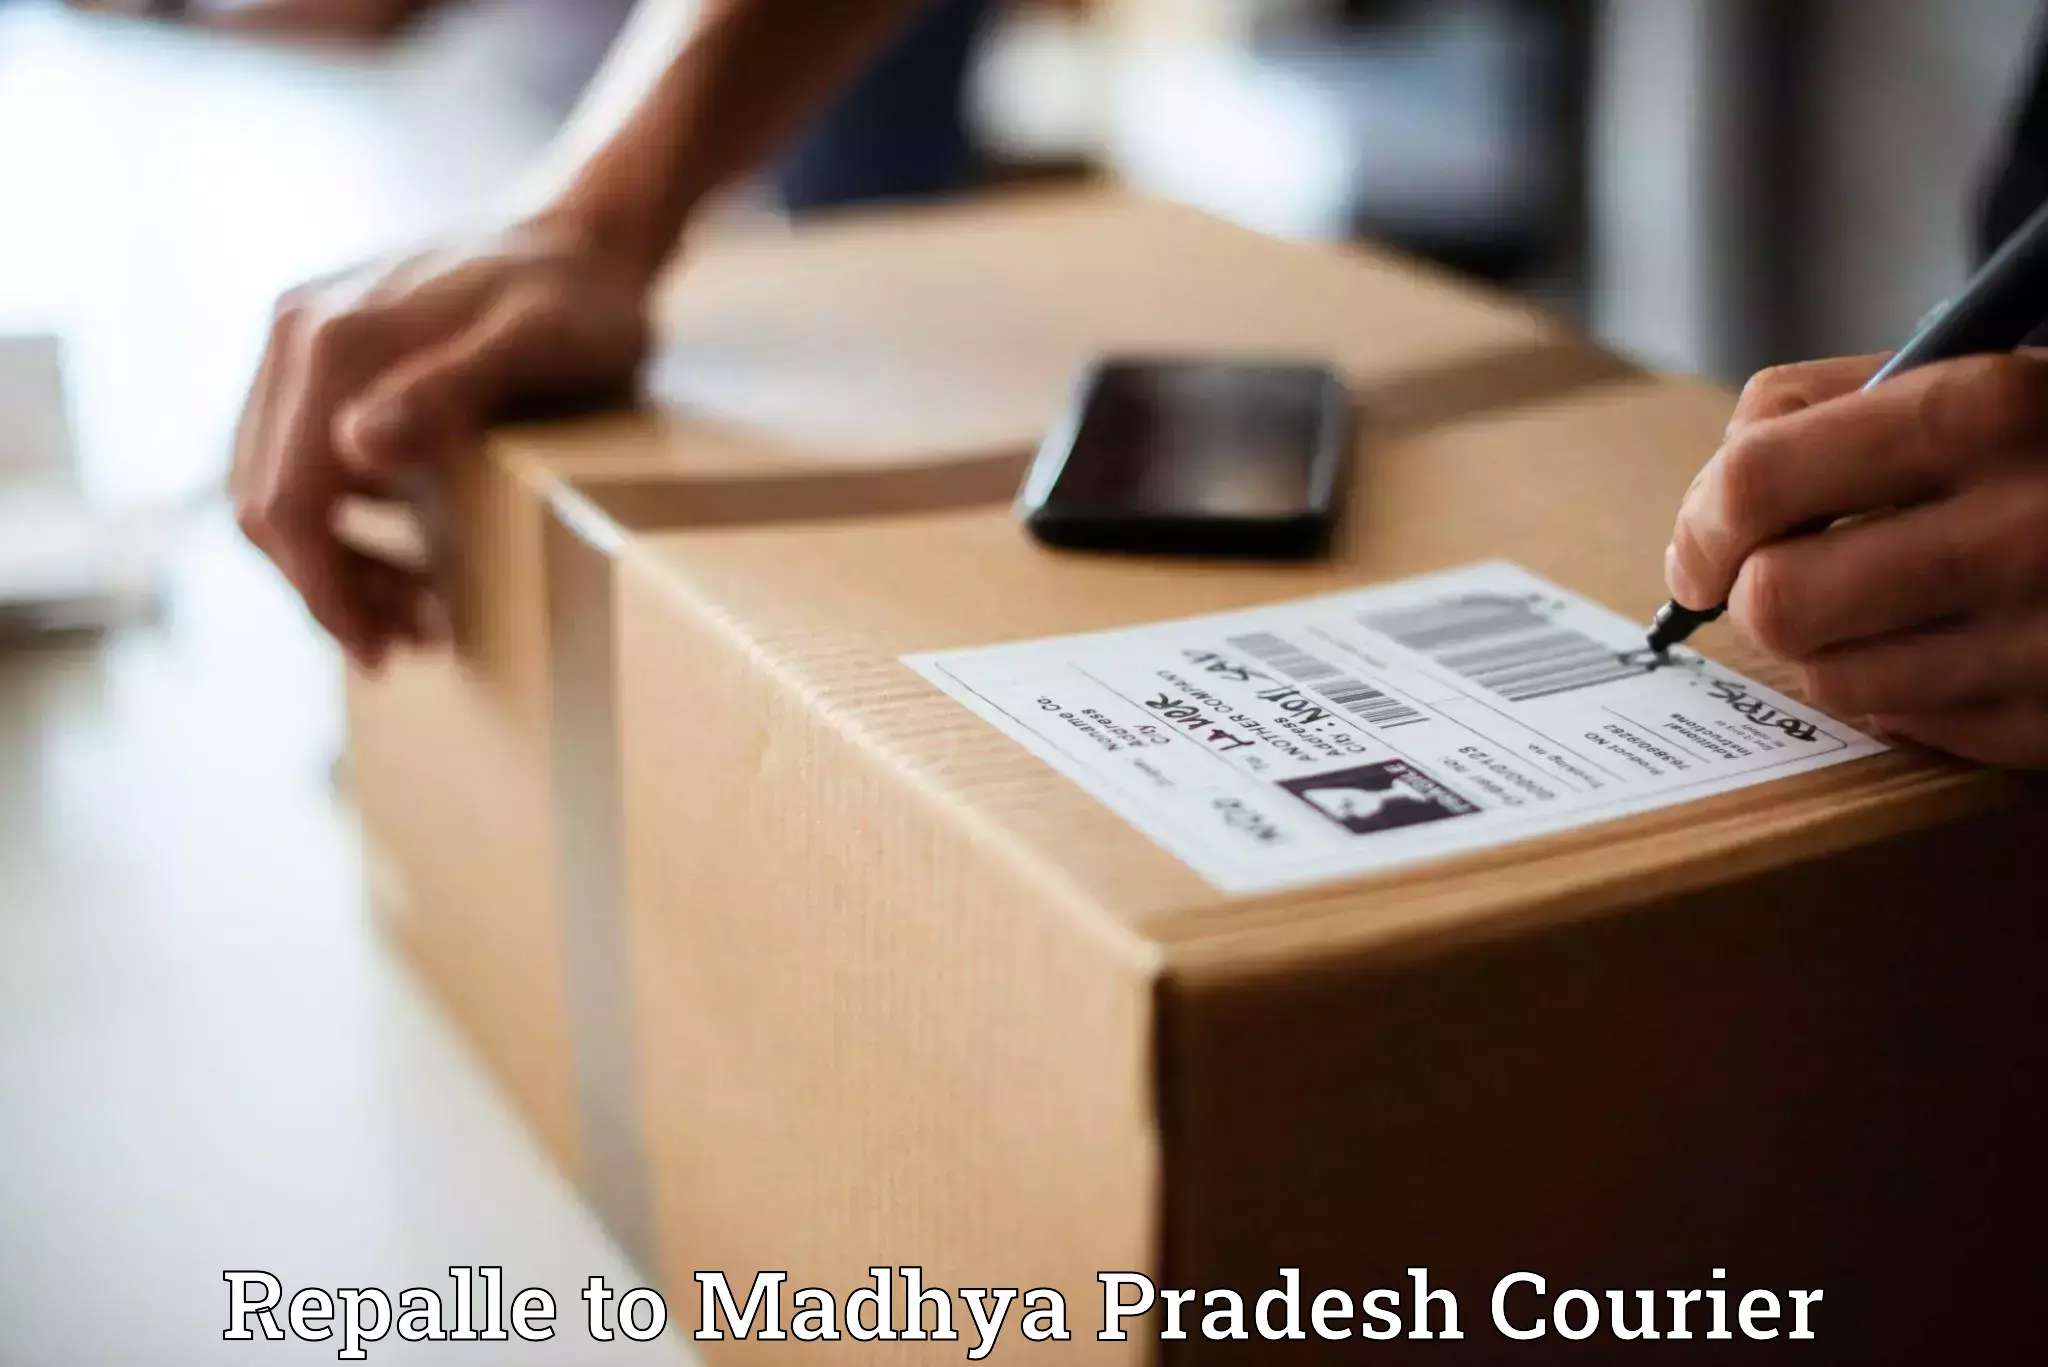 Next-generation courier services Repalle to Jabalpur